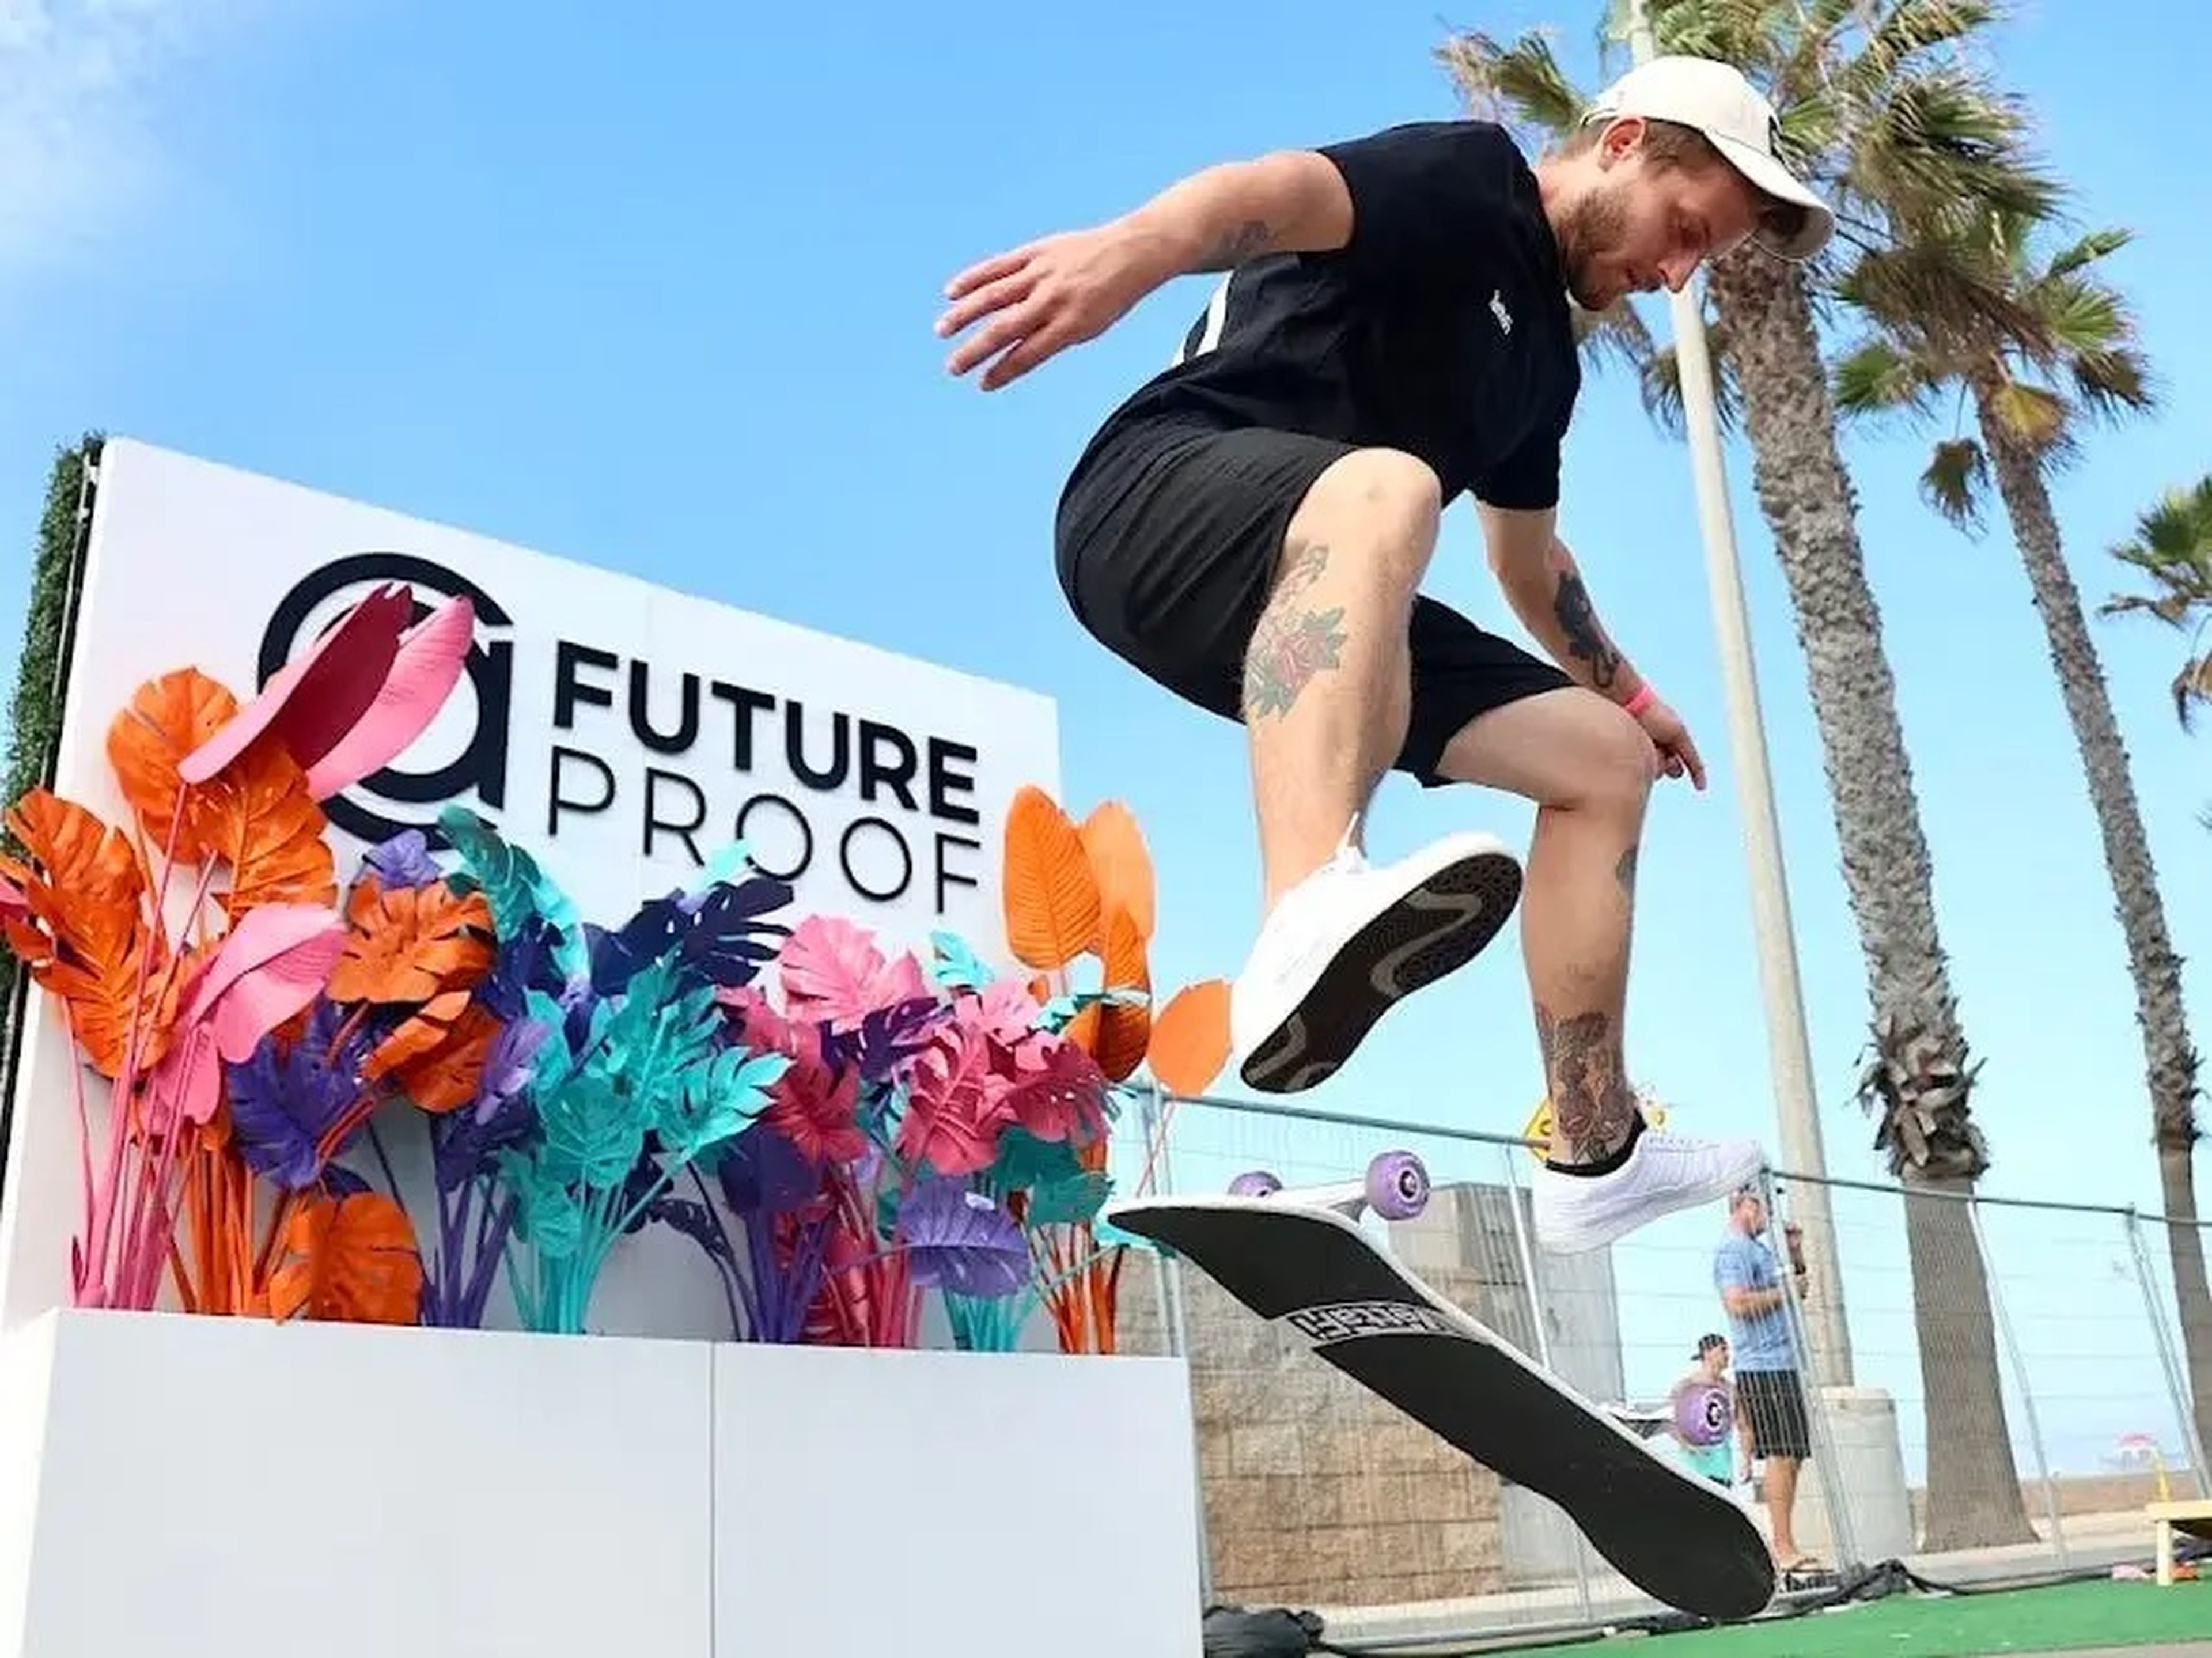 Future Proof rindió homenaje a la cultura del monopatín de Huntington Beach, California.